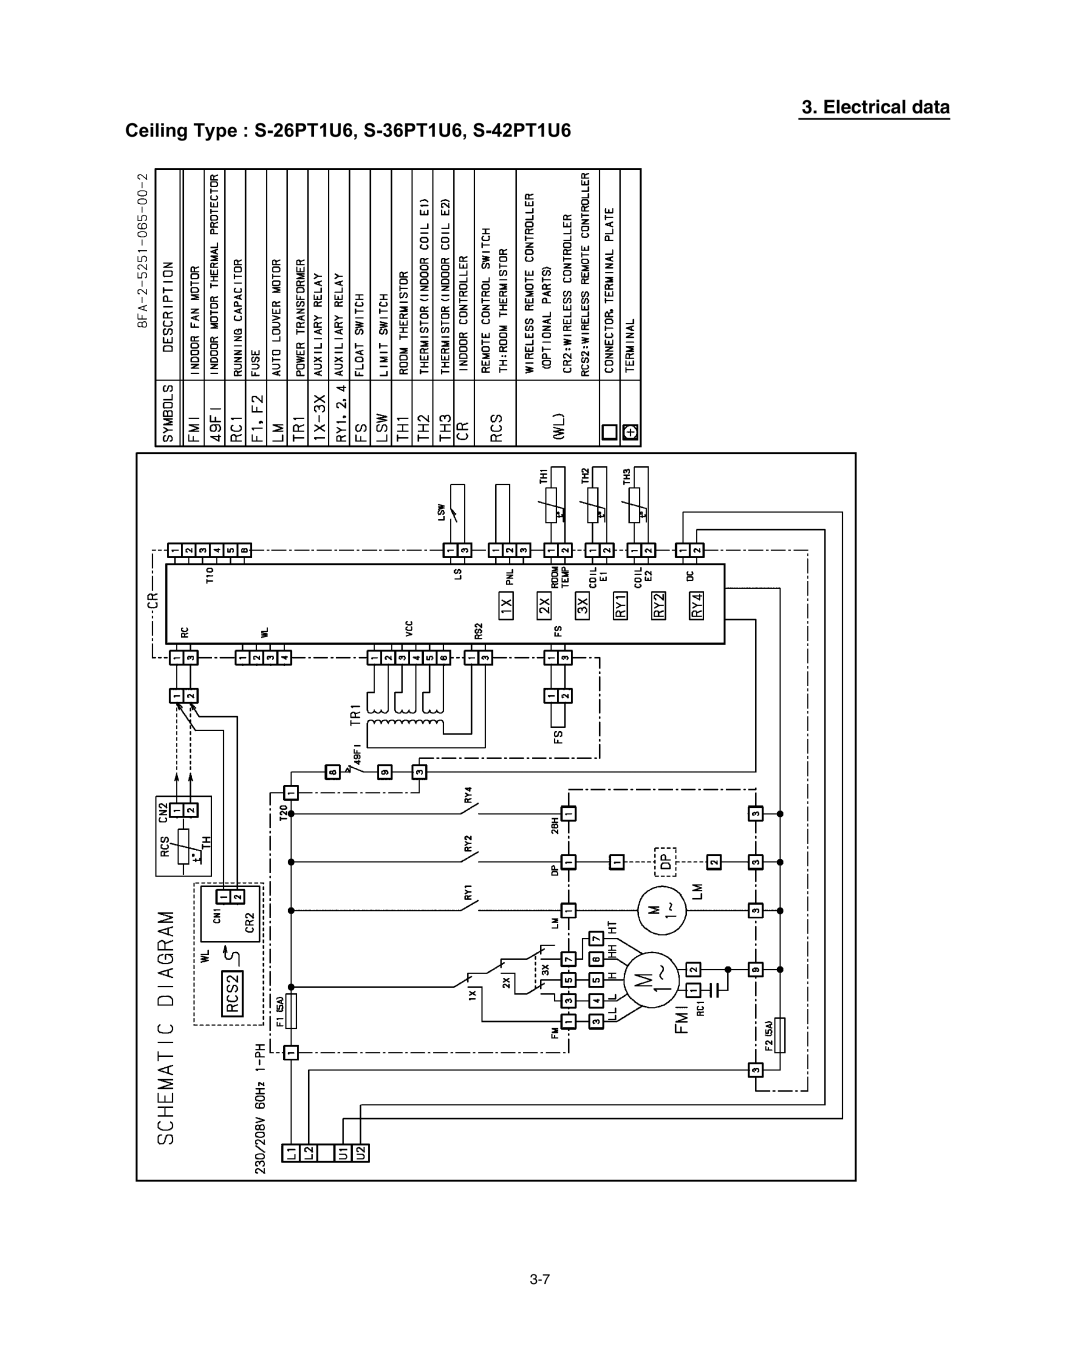 Panasonic R410A service manual Electrical data, Ceiling Type S-26PT1U6, S-36PT1U6, S-42PT1U6 